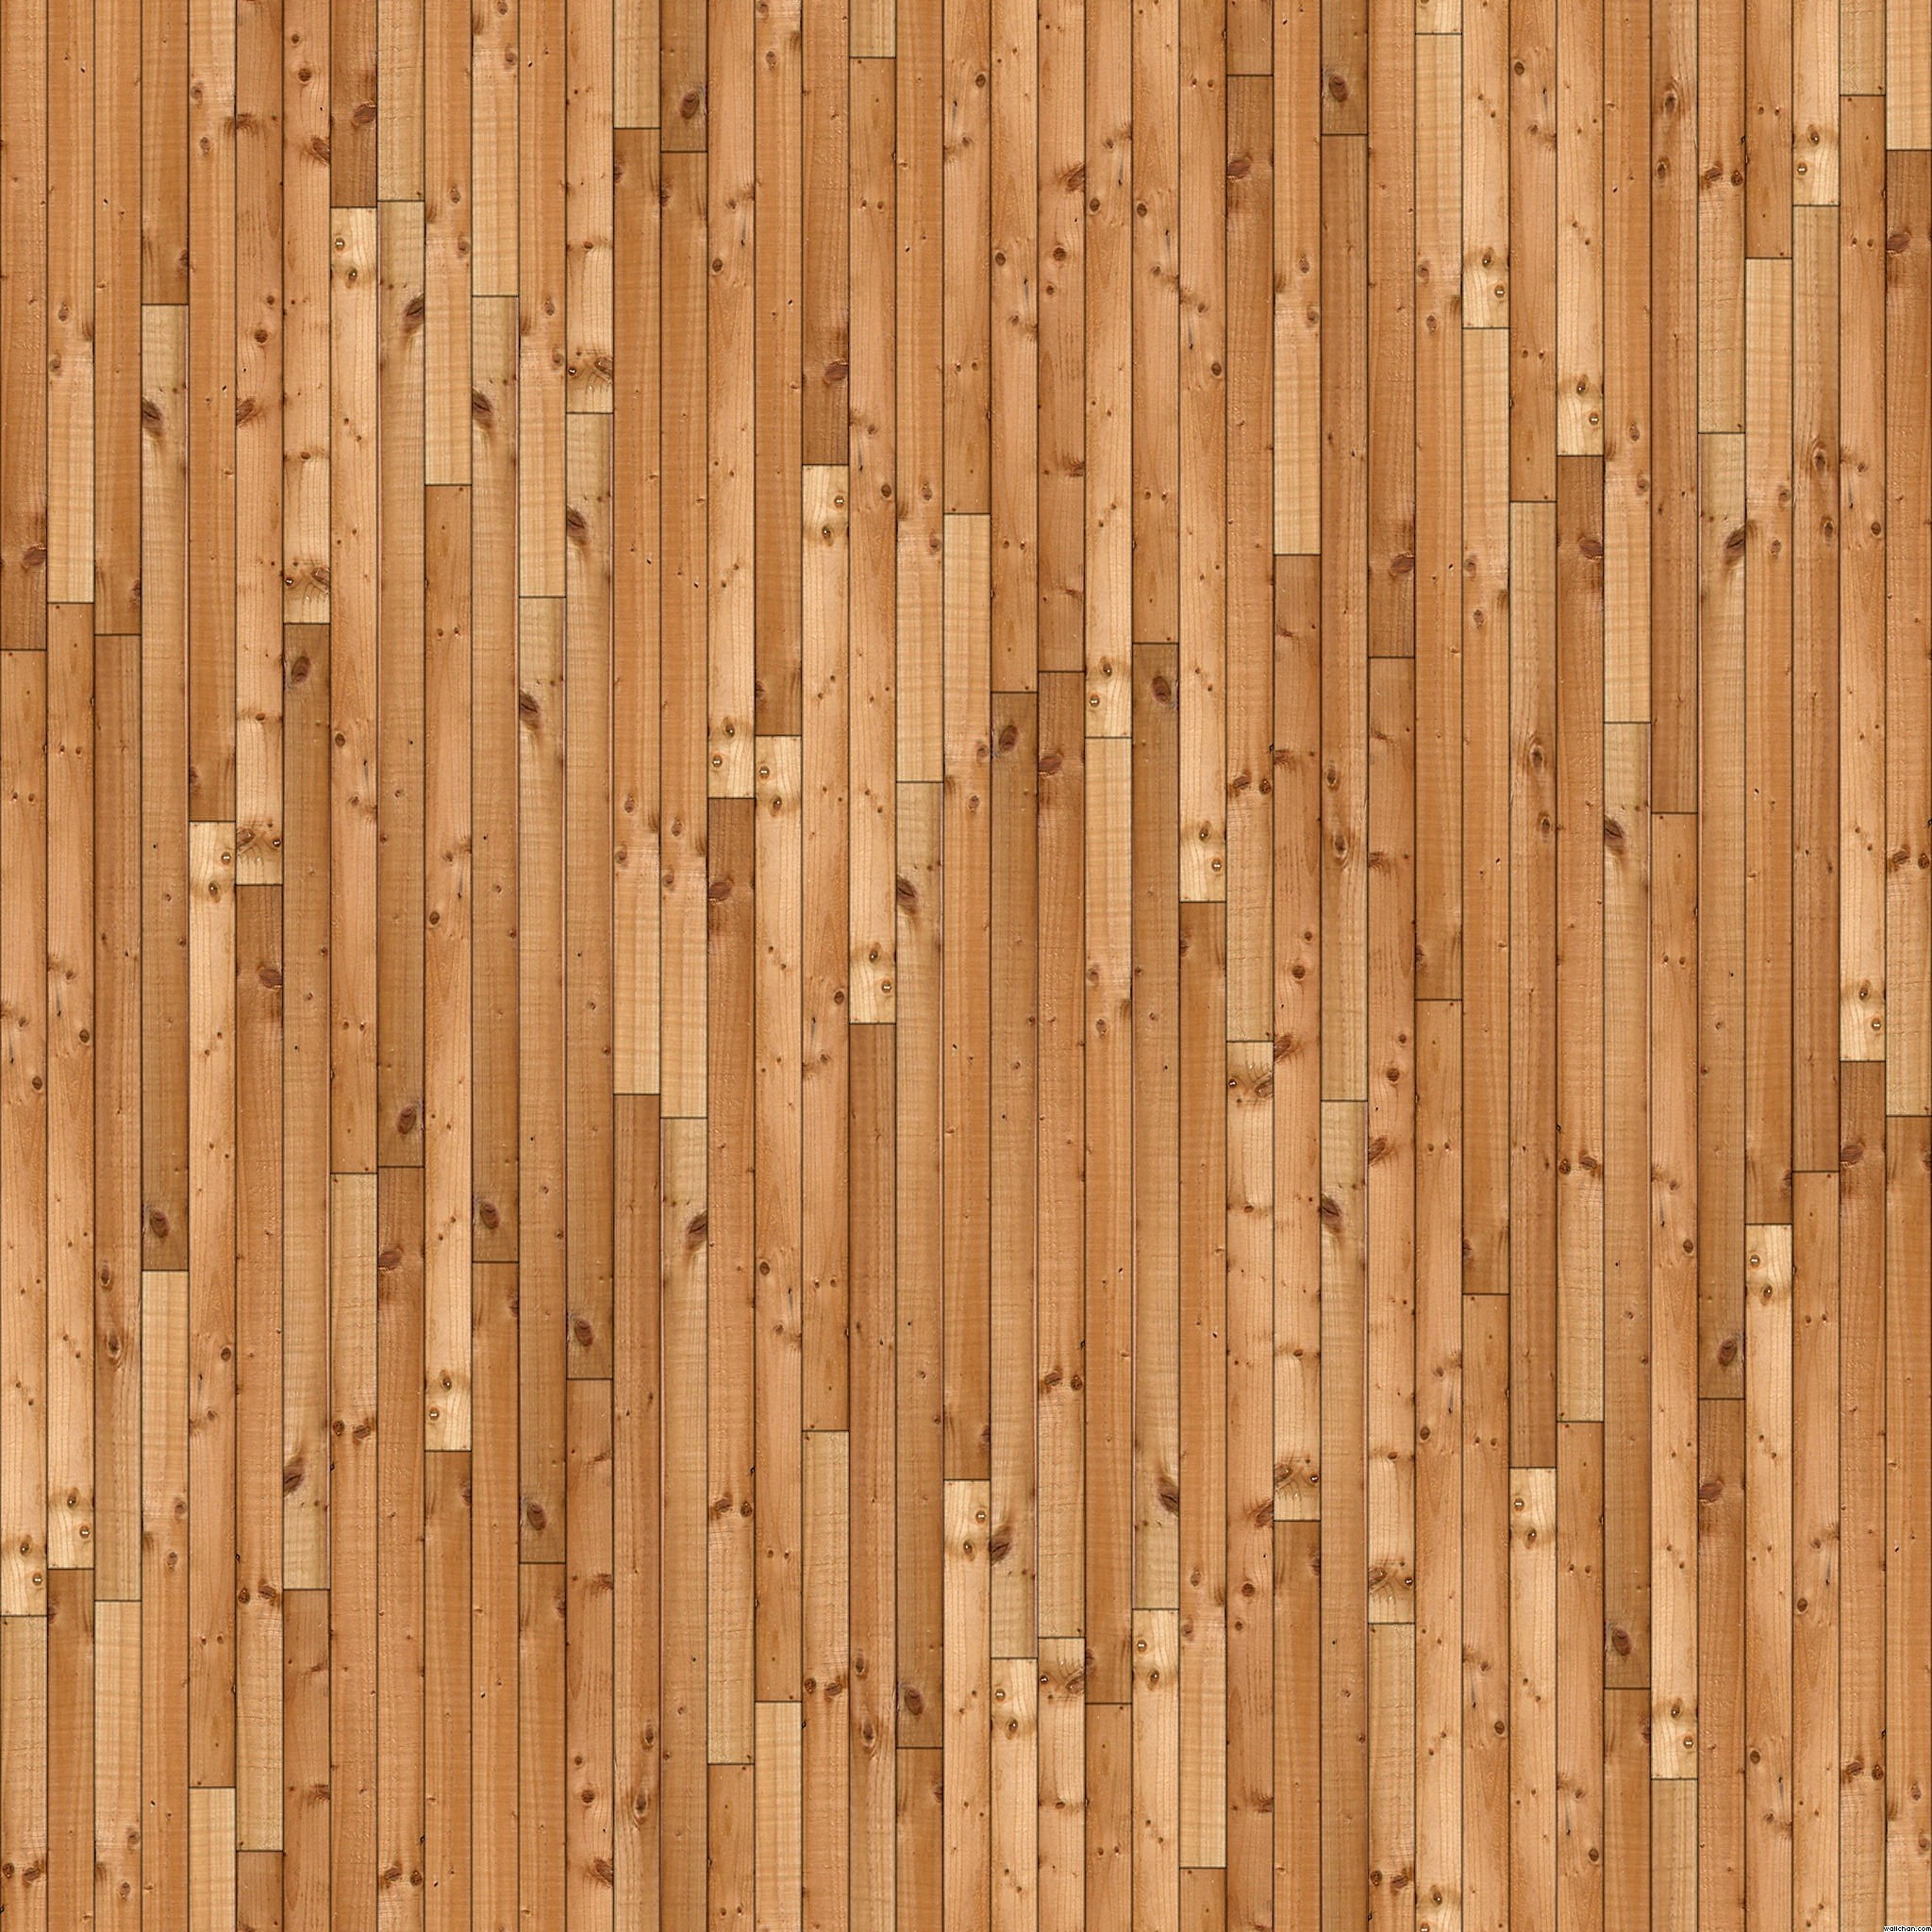 Free Download Brilliant Basketball Wood Floor Texture 48 X 48 5733 Kb Png 48x48 For Your Desktop Mobile Tablet Explore 44 Wood Style Wallpaper Wallpaper Black And White Wallpaper For Walls New Wall Wallpaper